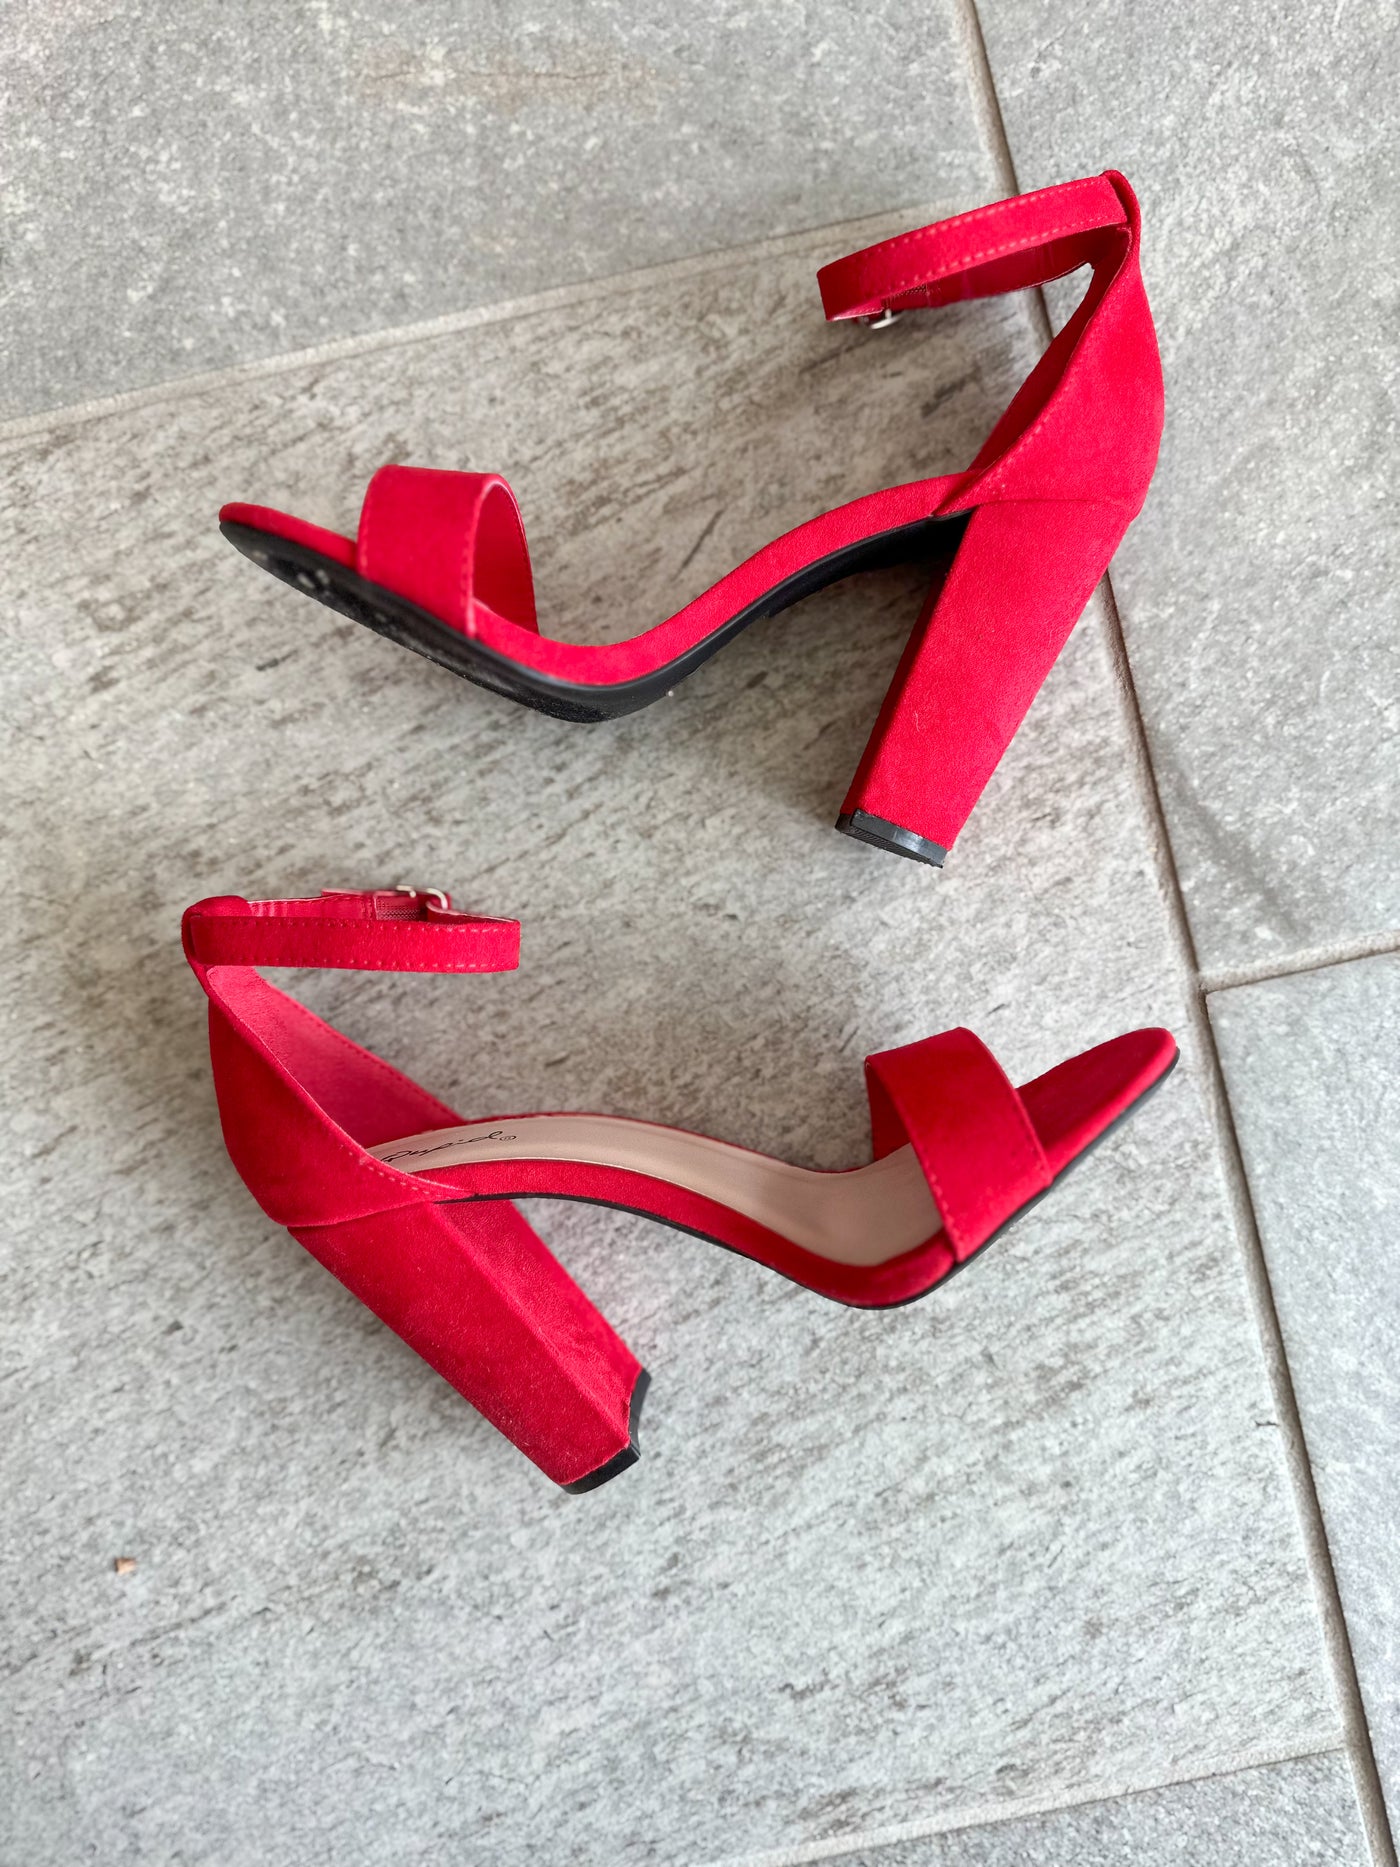 Cashmere Red Heels